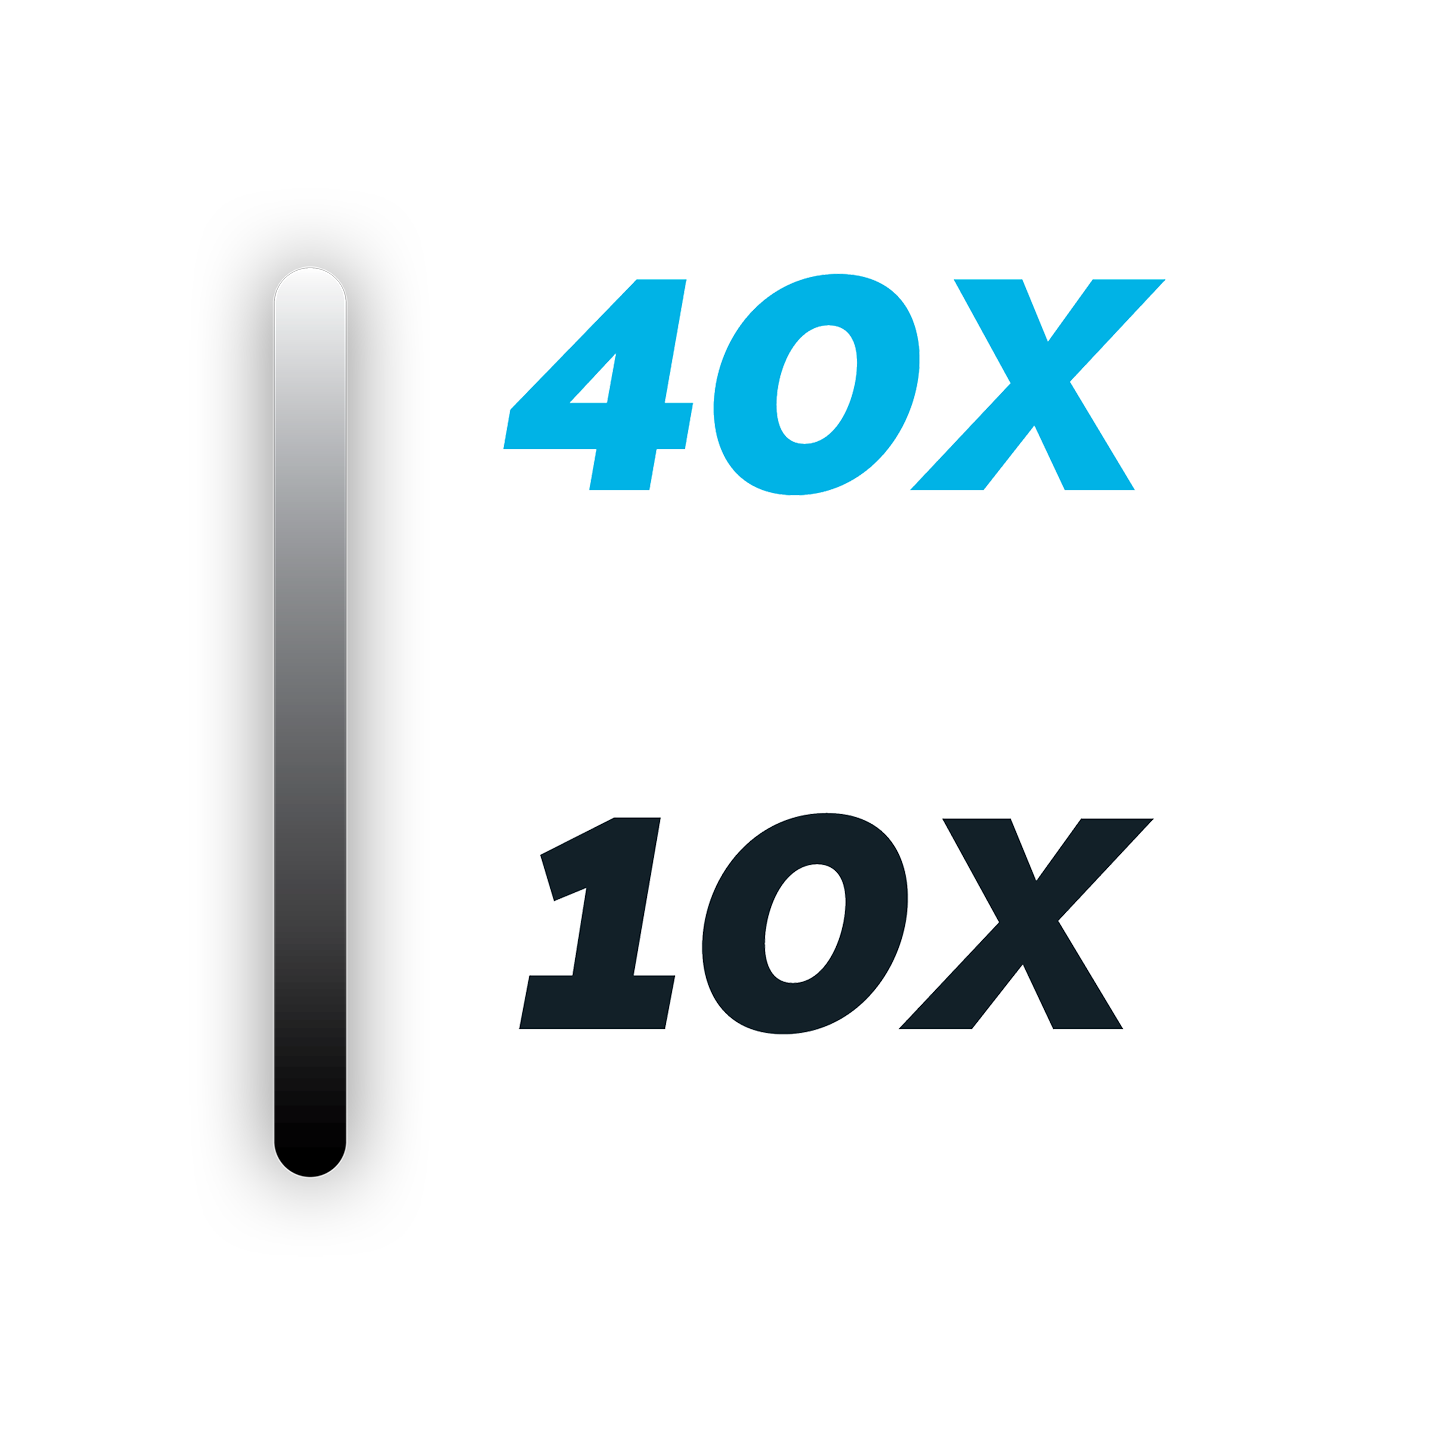 Dolby Vision - 40x brighter, 10x darker blacks